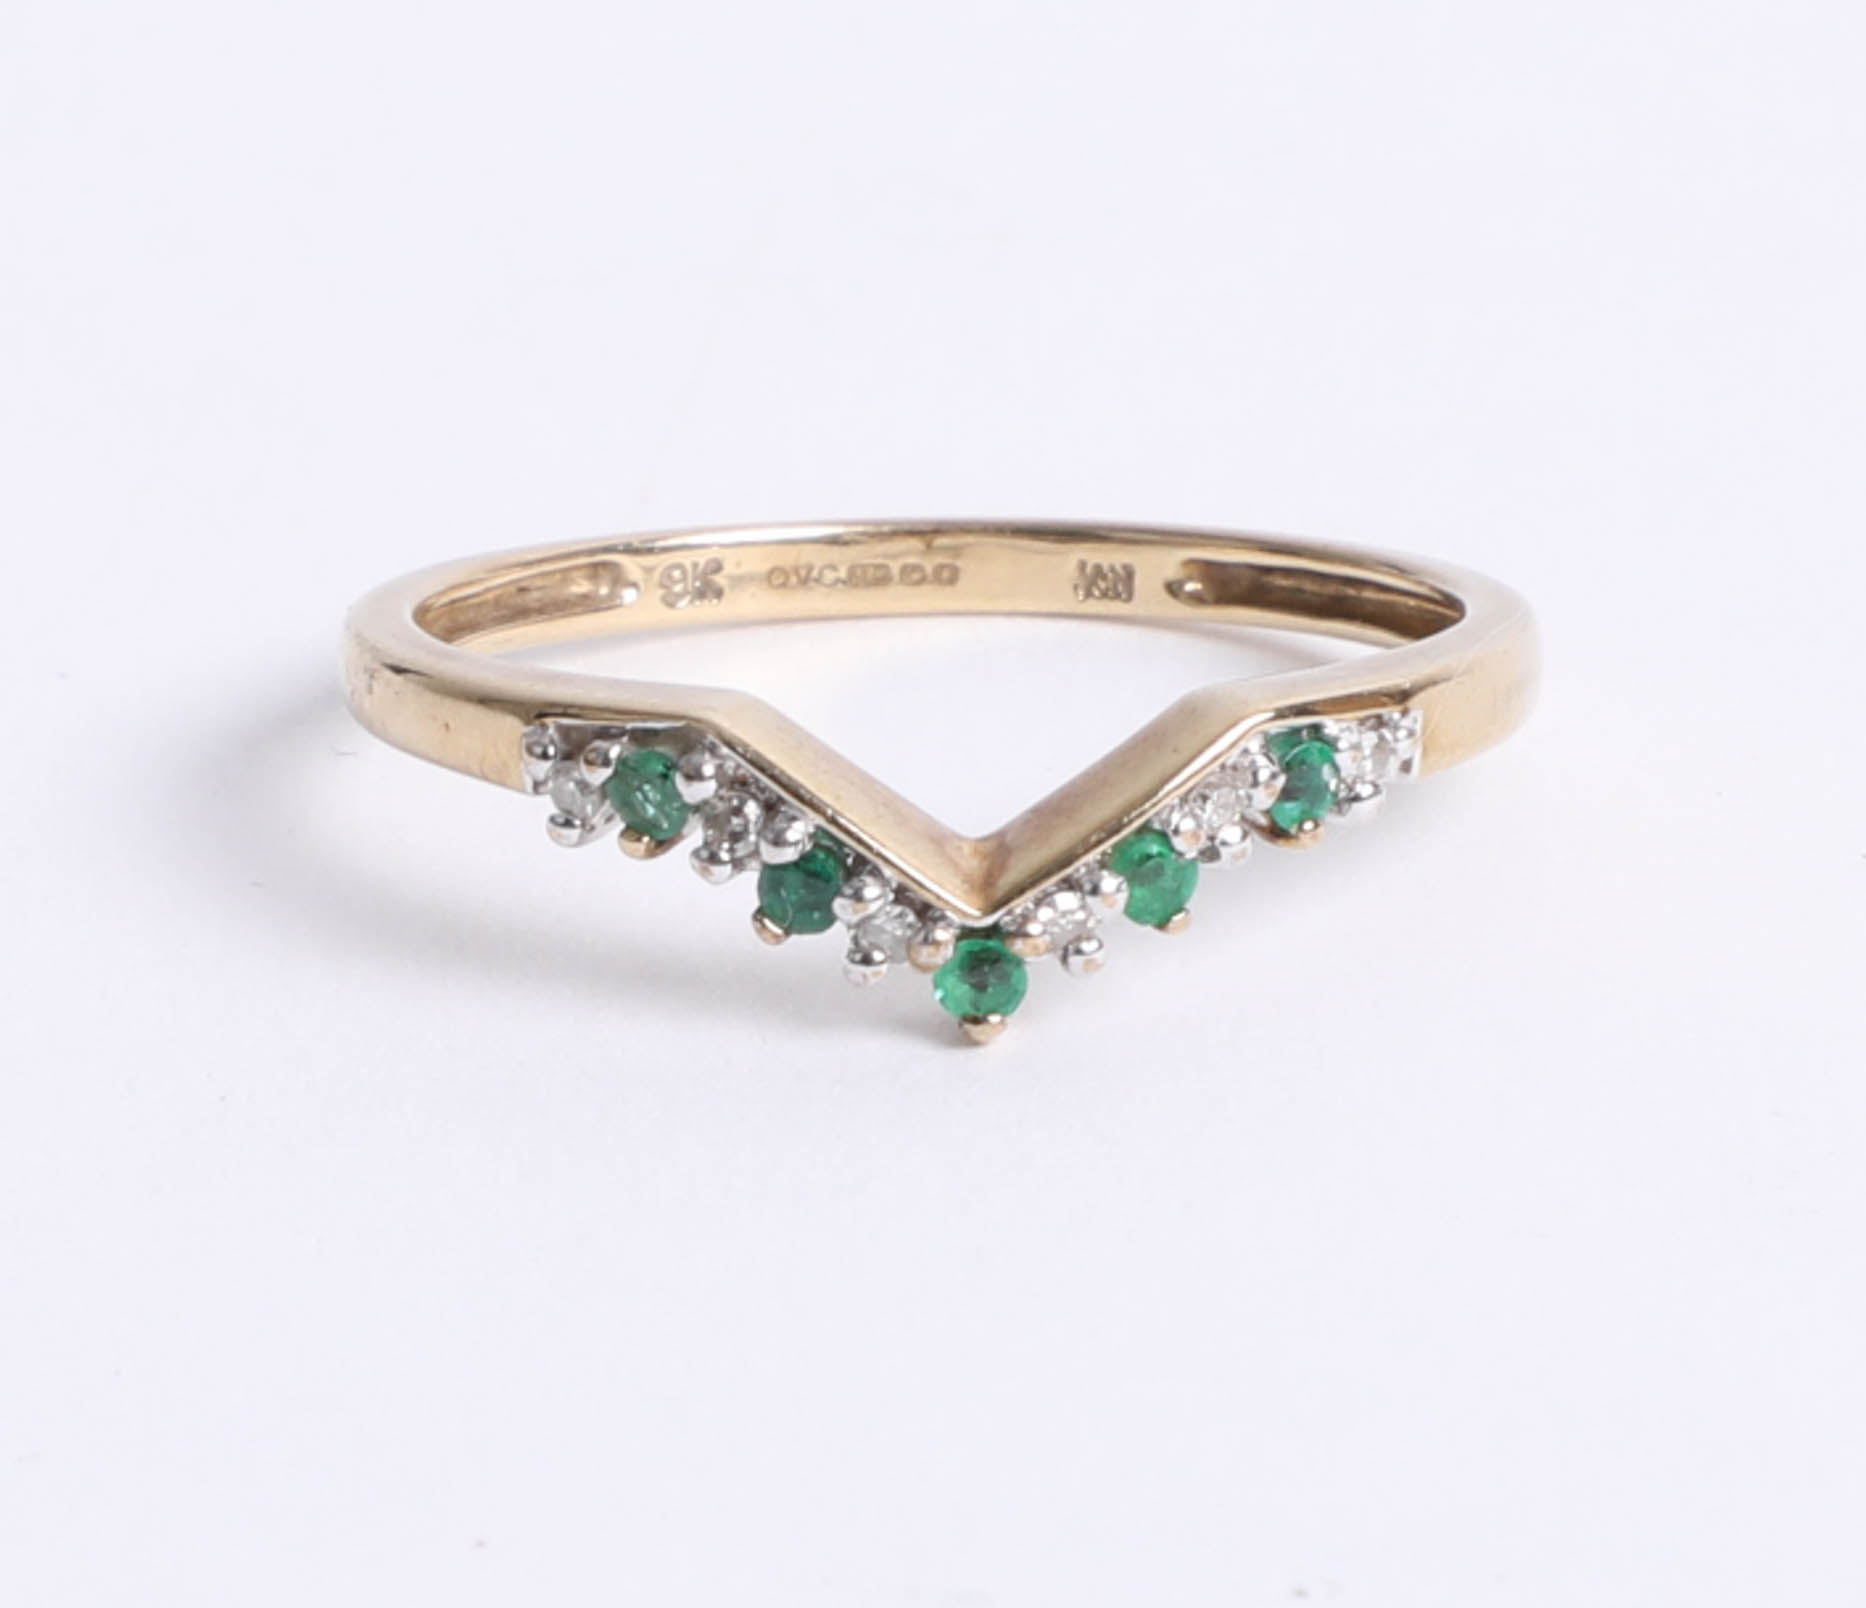 A 9ct emerald and diamond qvc wishbone ring.